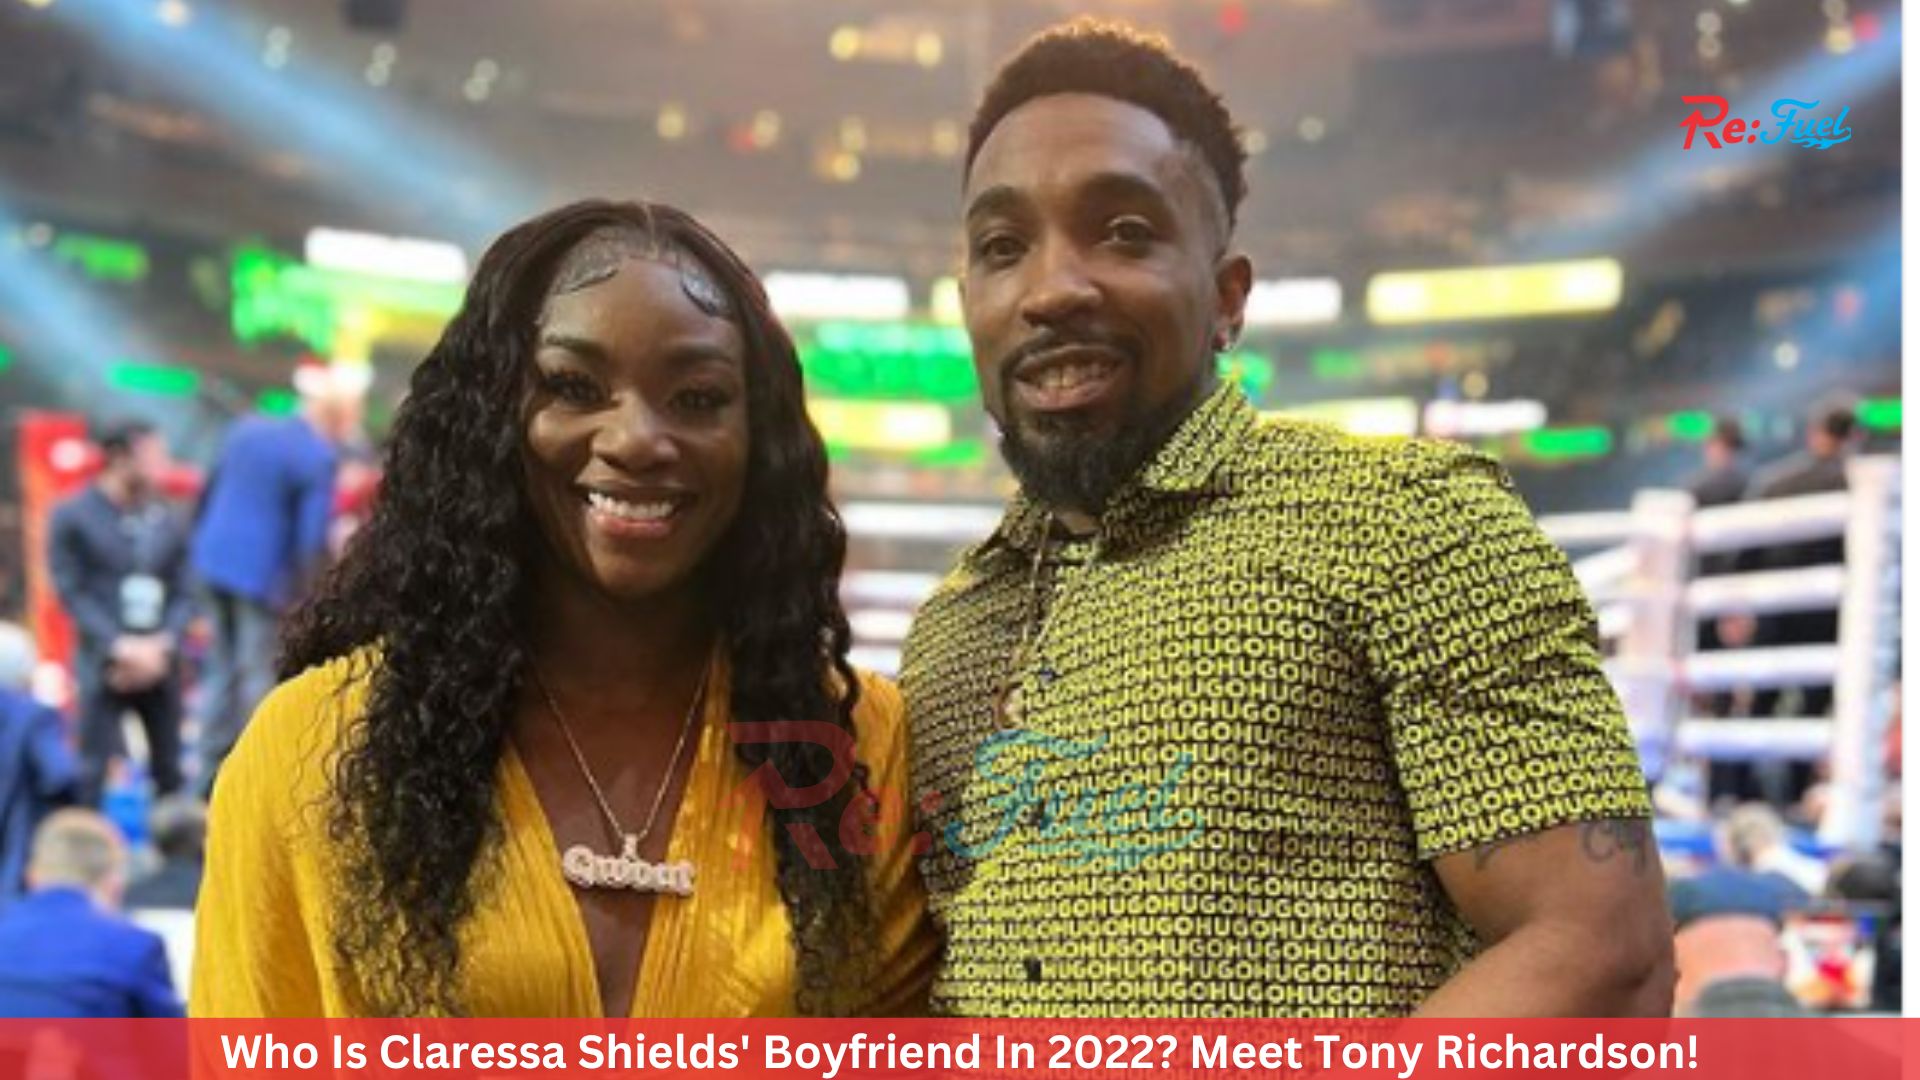 Who Is Claressa Shields' Boyfriend In 2022? Meet Tony Richardson!